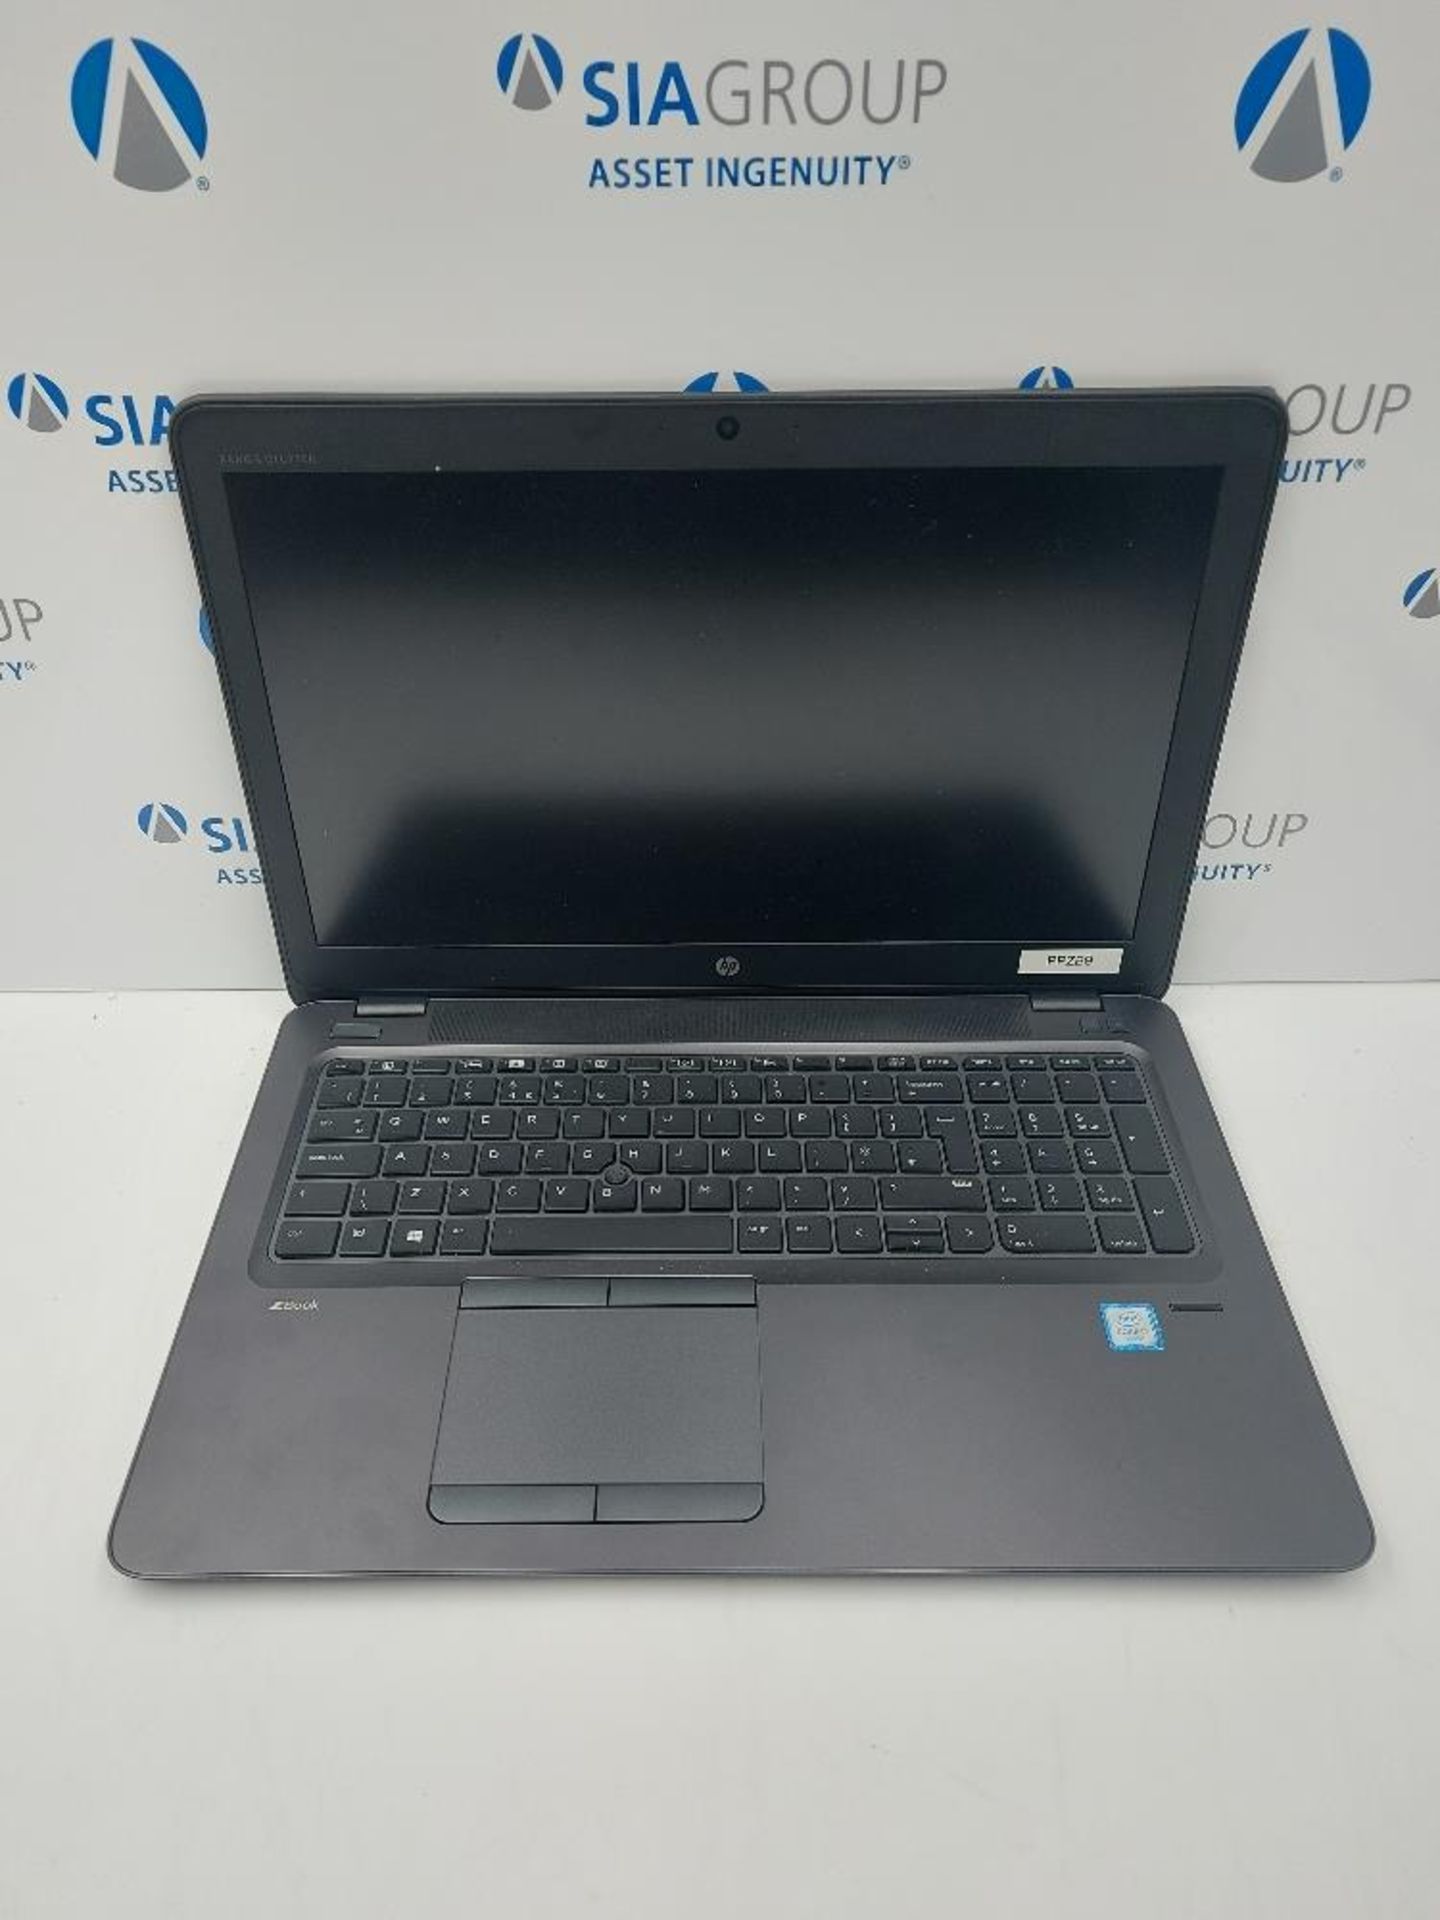 HP Zbook 15u G3 Laptop with Flight Case - Image 3 of 7